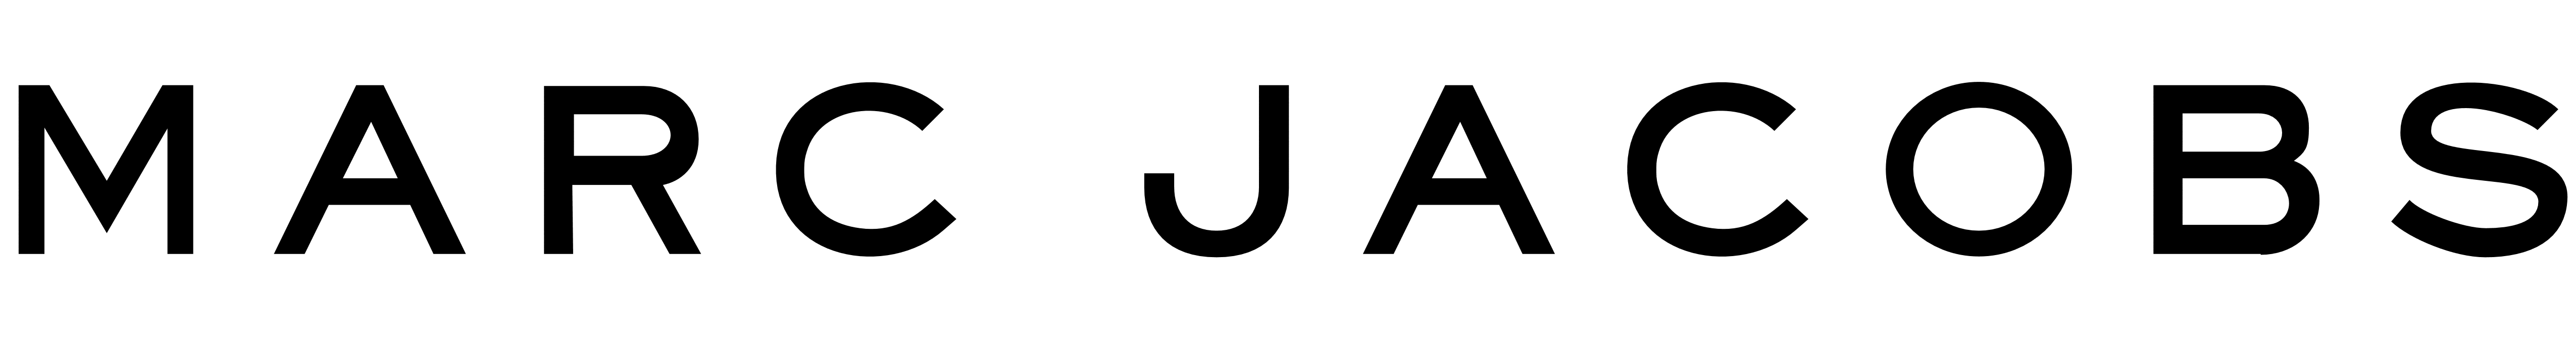 Marc Jacobs logo, logotype